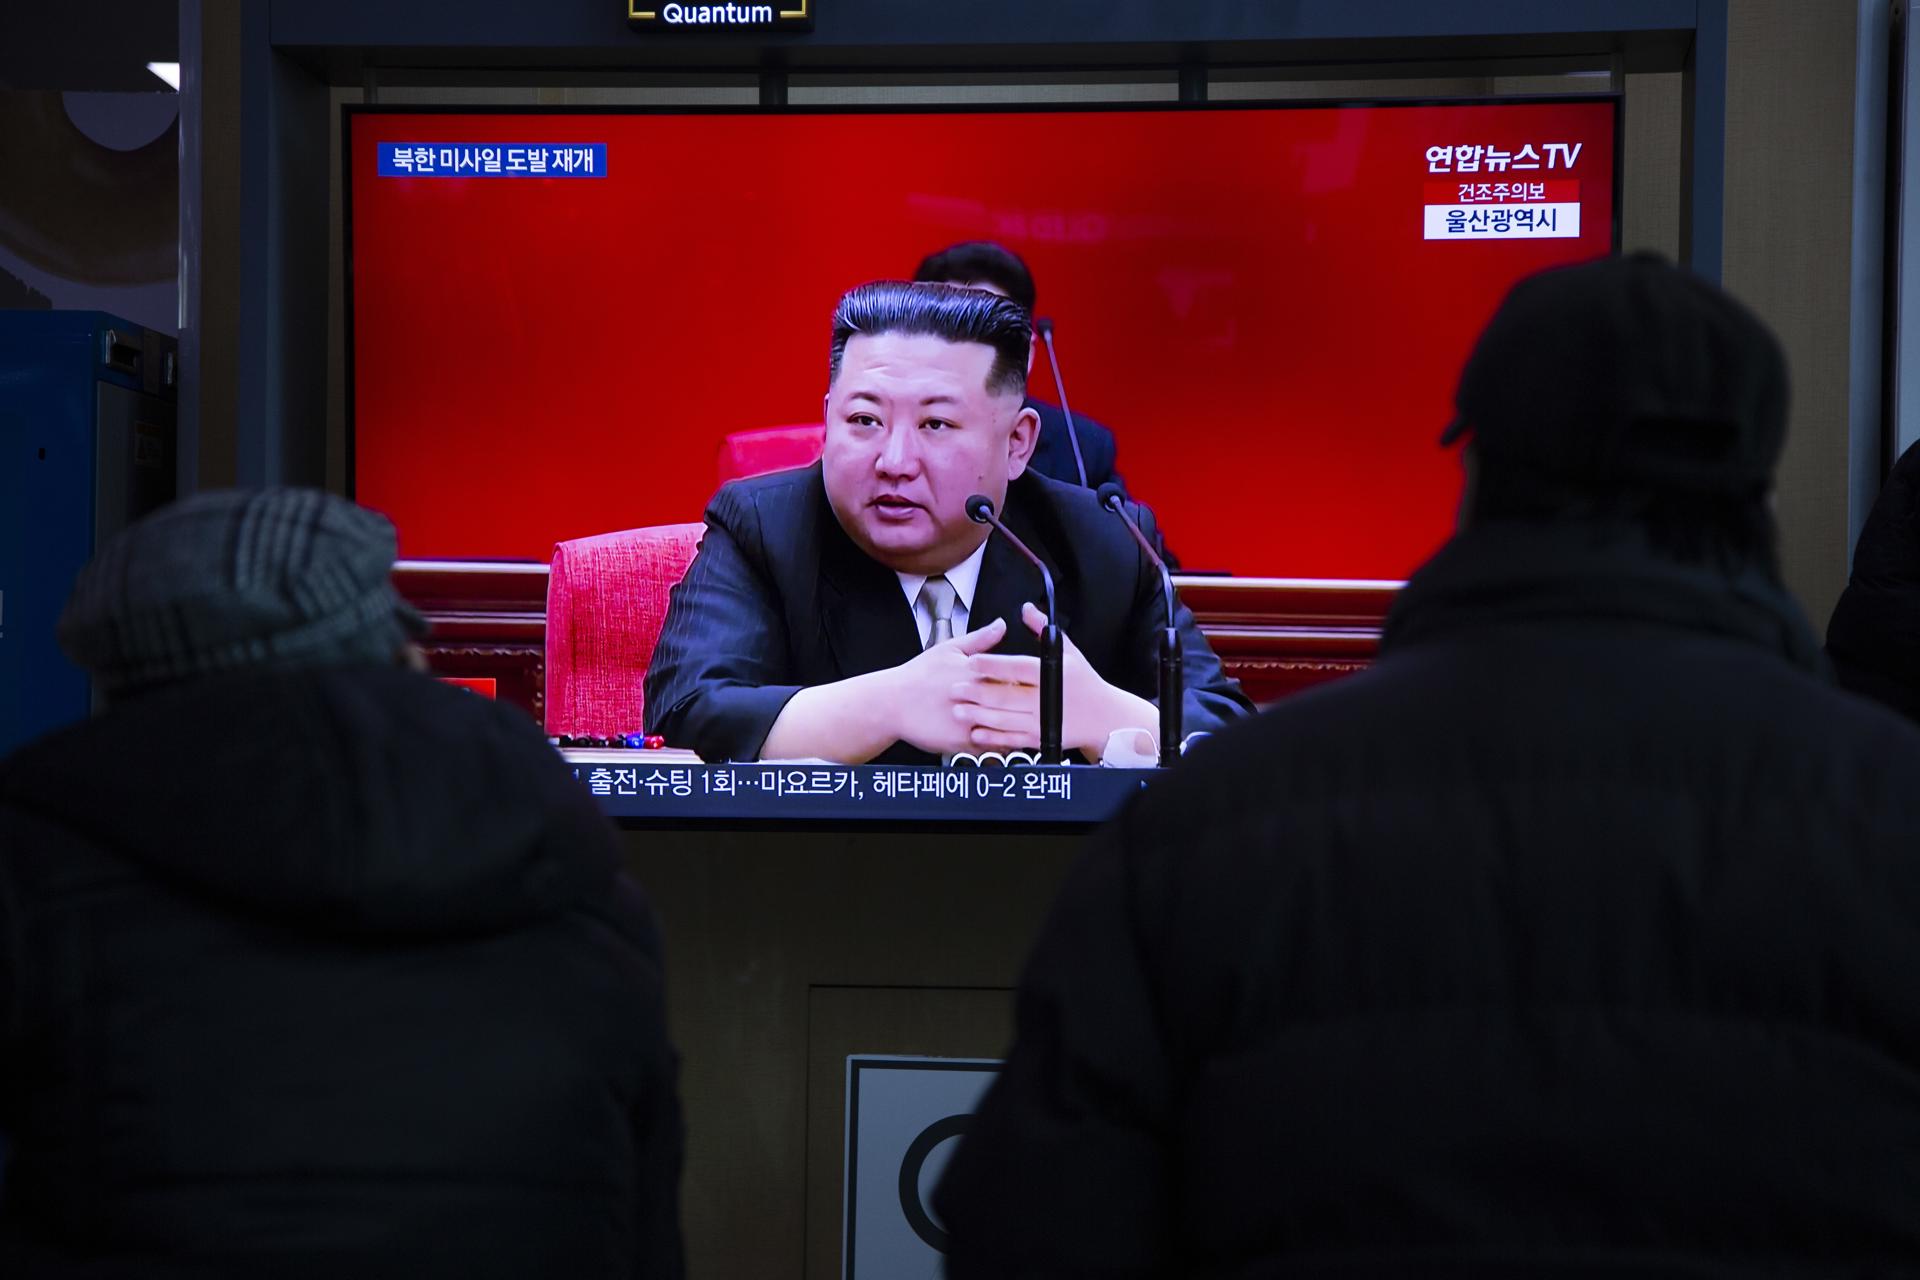 People watch North Korean leader Kim Jong-un on a tv monitor at a station in Seoul, South Korea, 31 December 2022. EFE/EPA/JEON HEON-KYUN